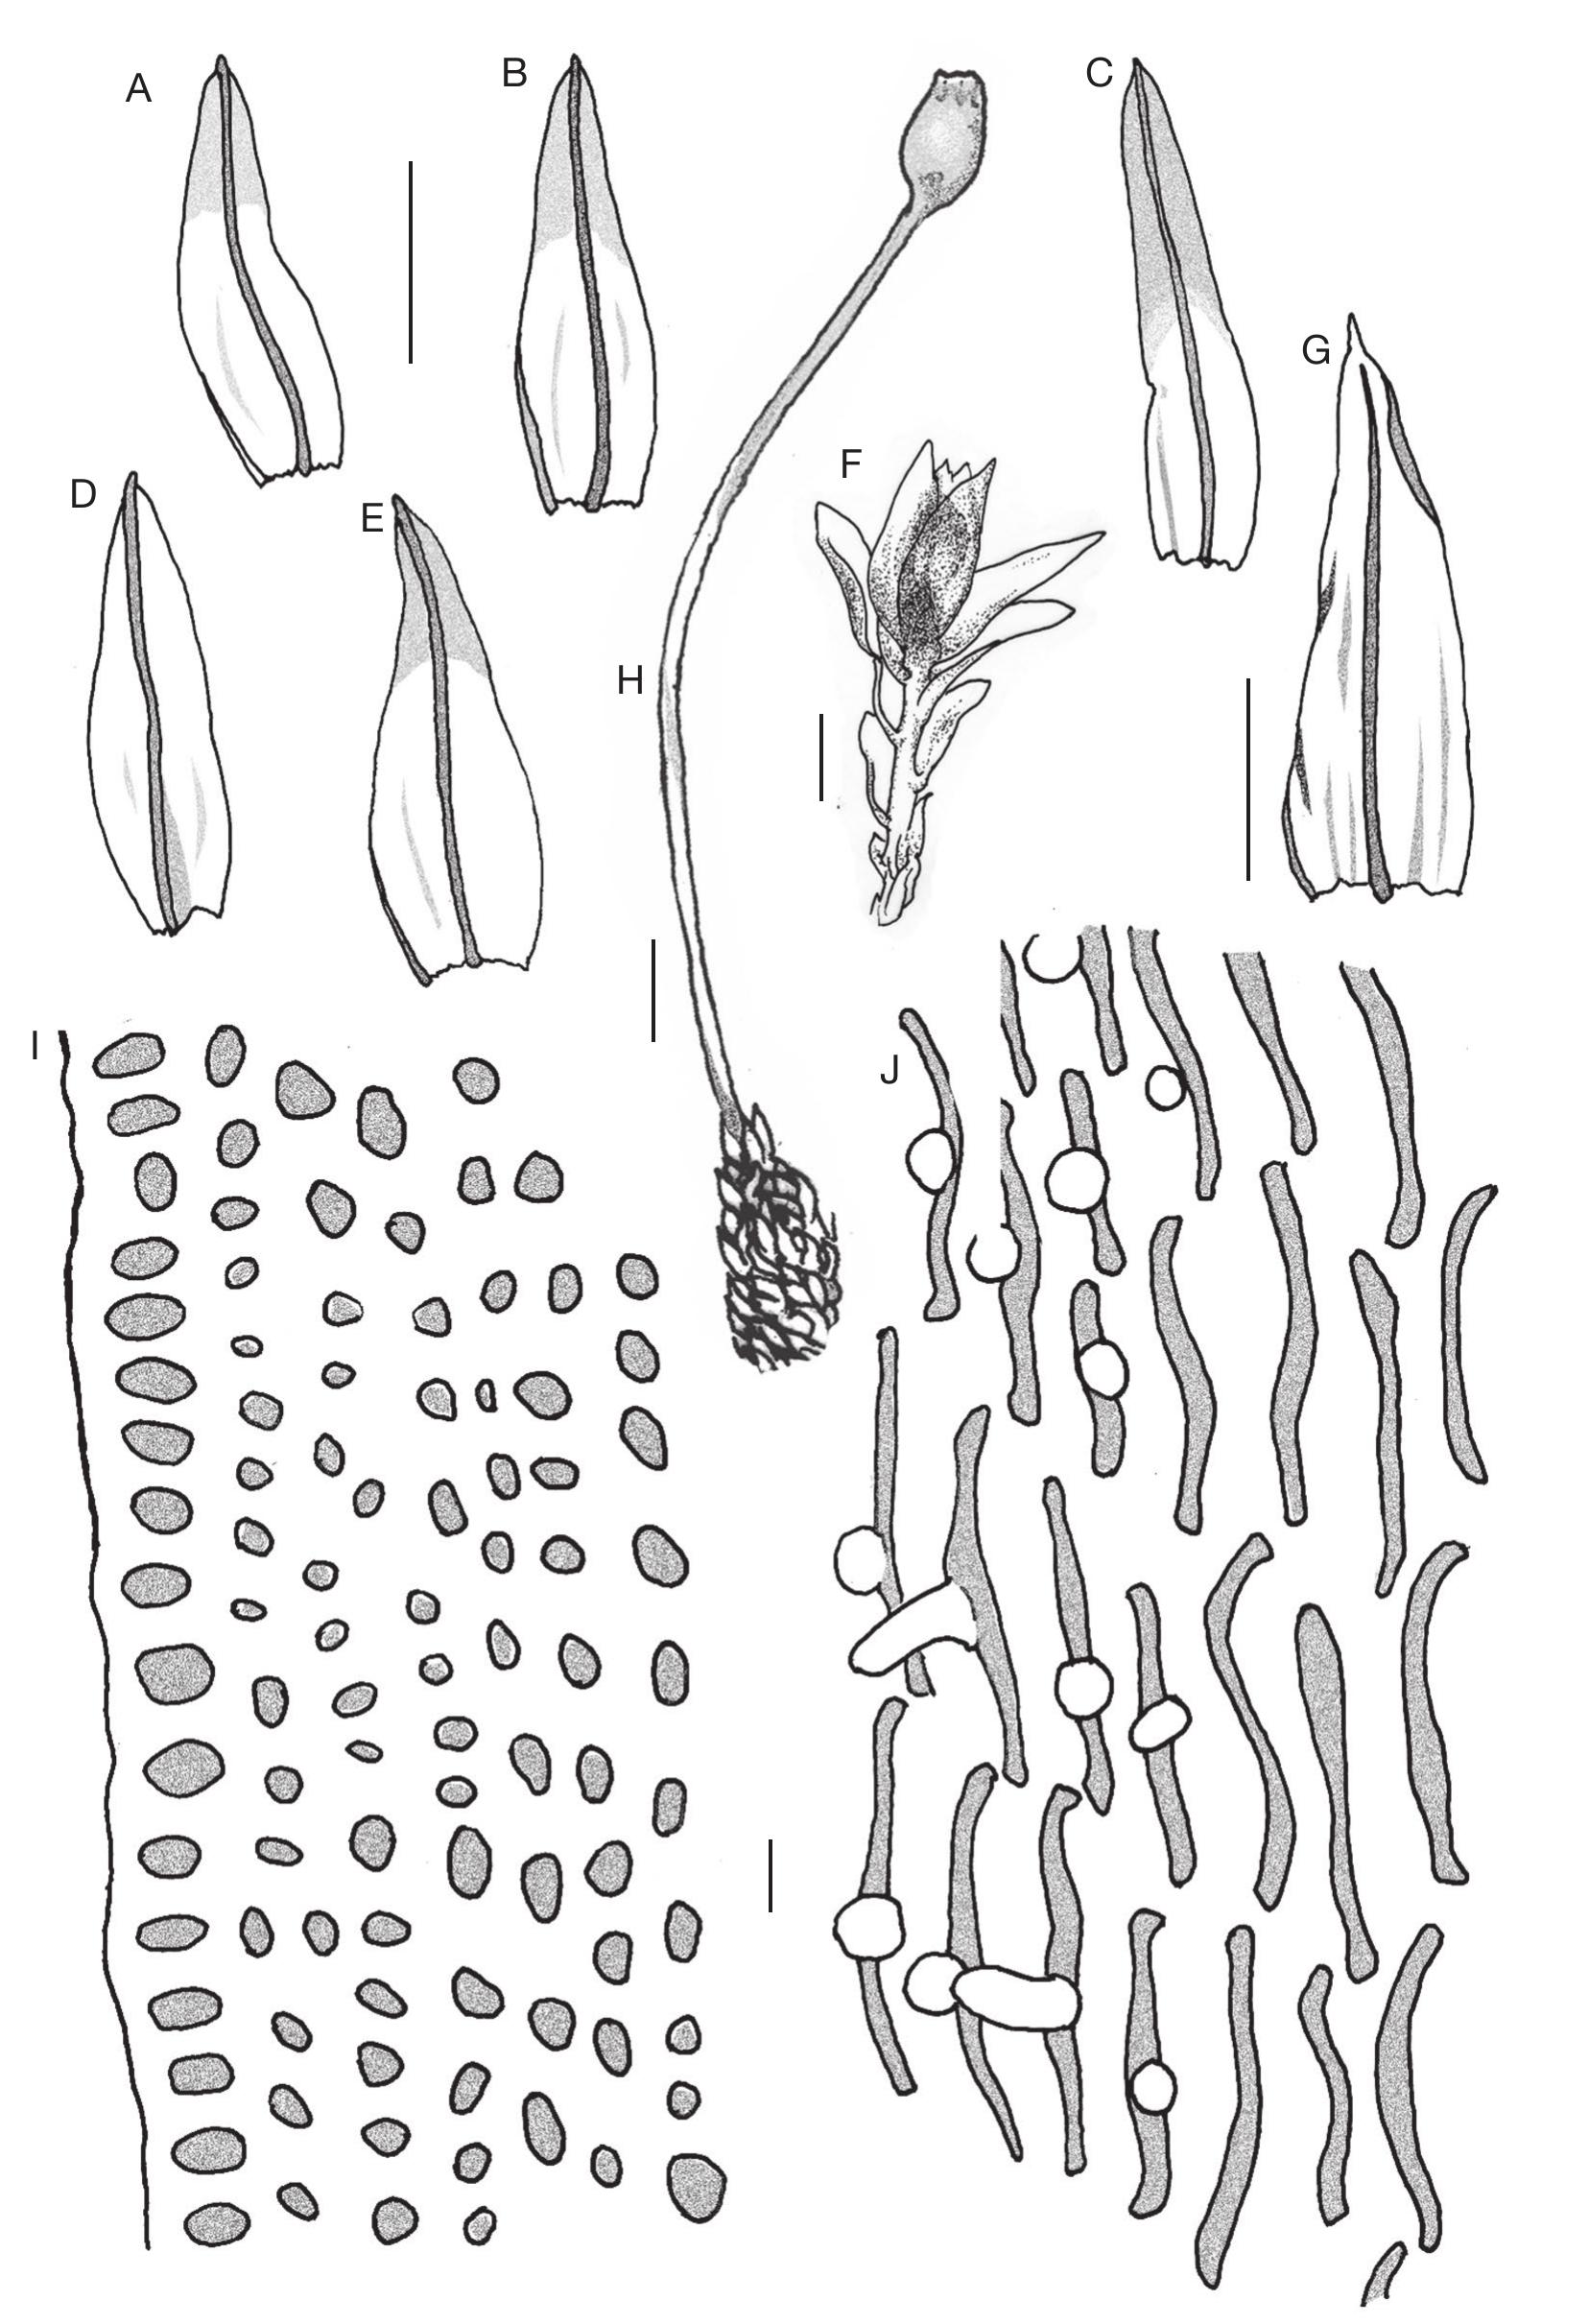 A Review Of The Genus Macromitrium Brid Orthotrichaceae Bryophyta In New Caledonia